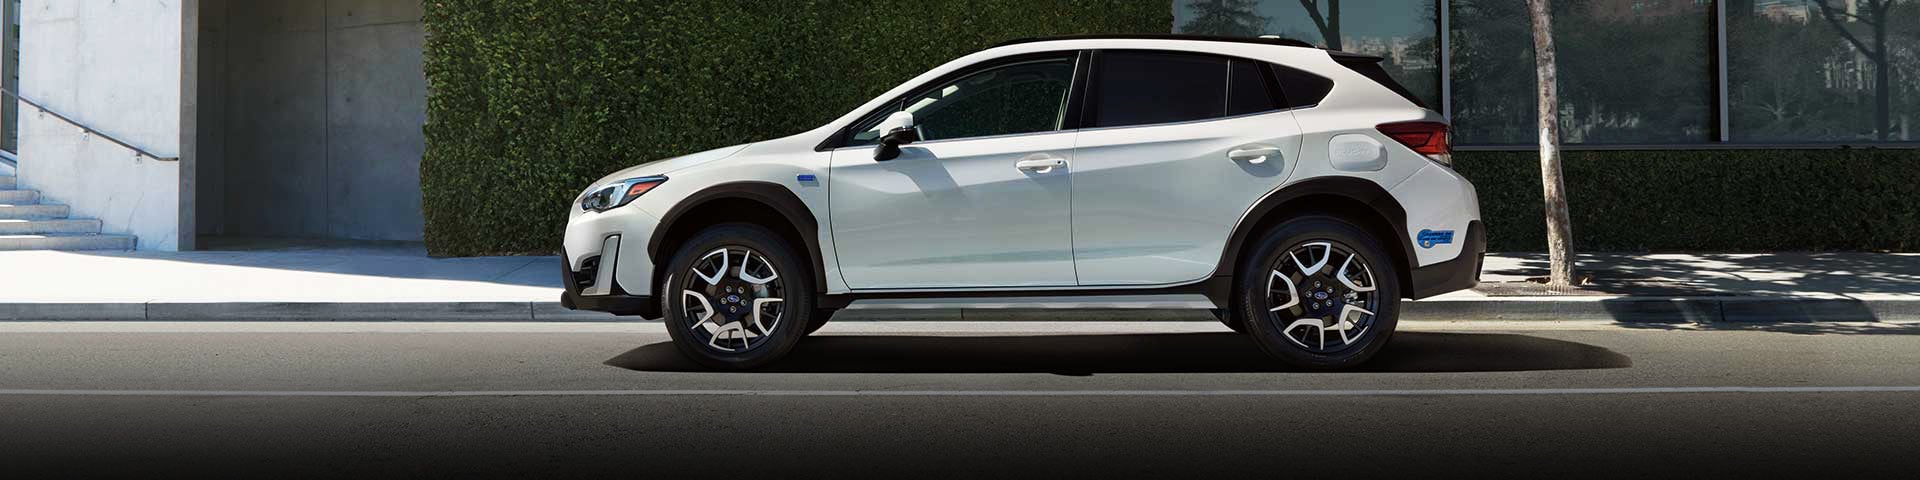 The side profile of a white Subaru Crosstrek Hybrid | Royal Moore Subaru in Hillsboro OR